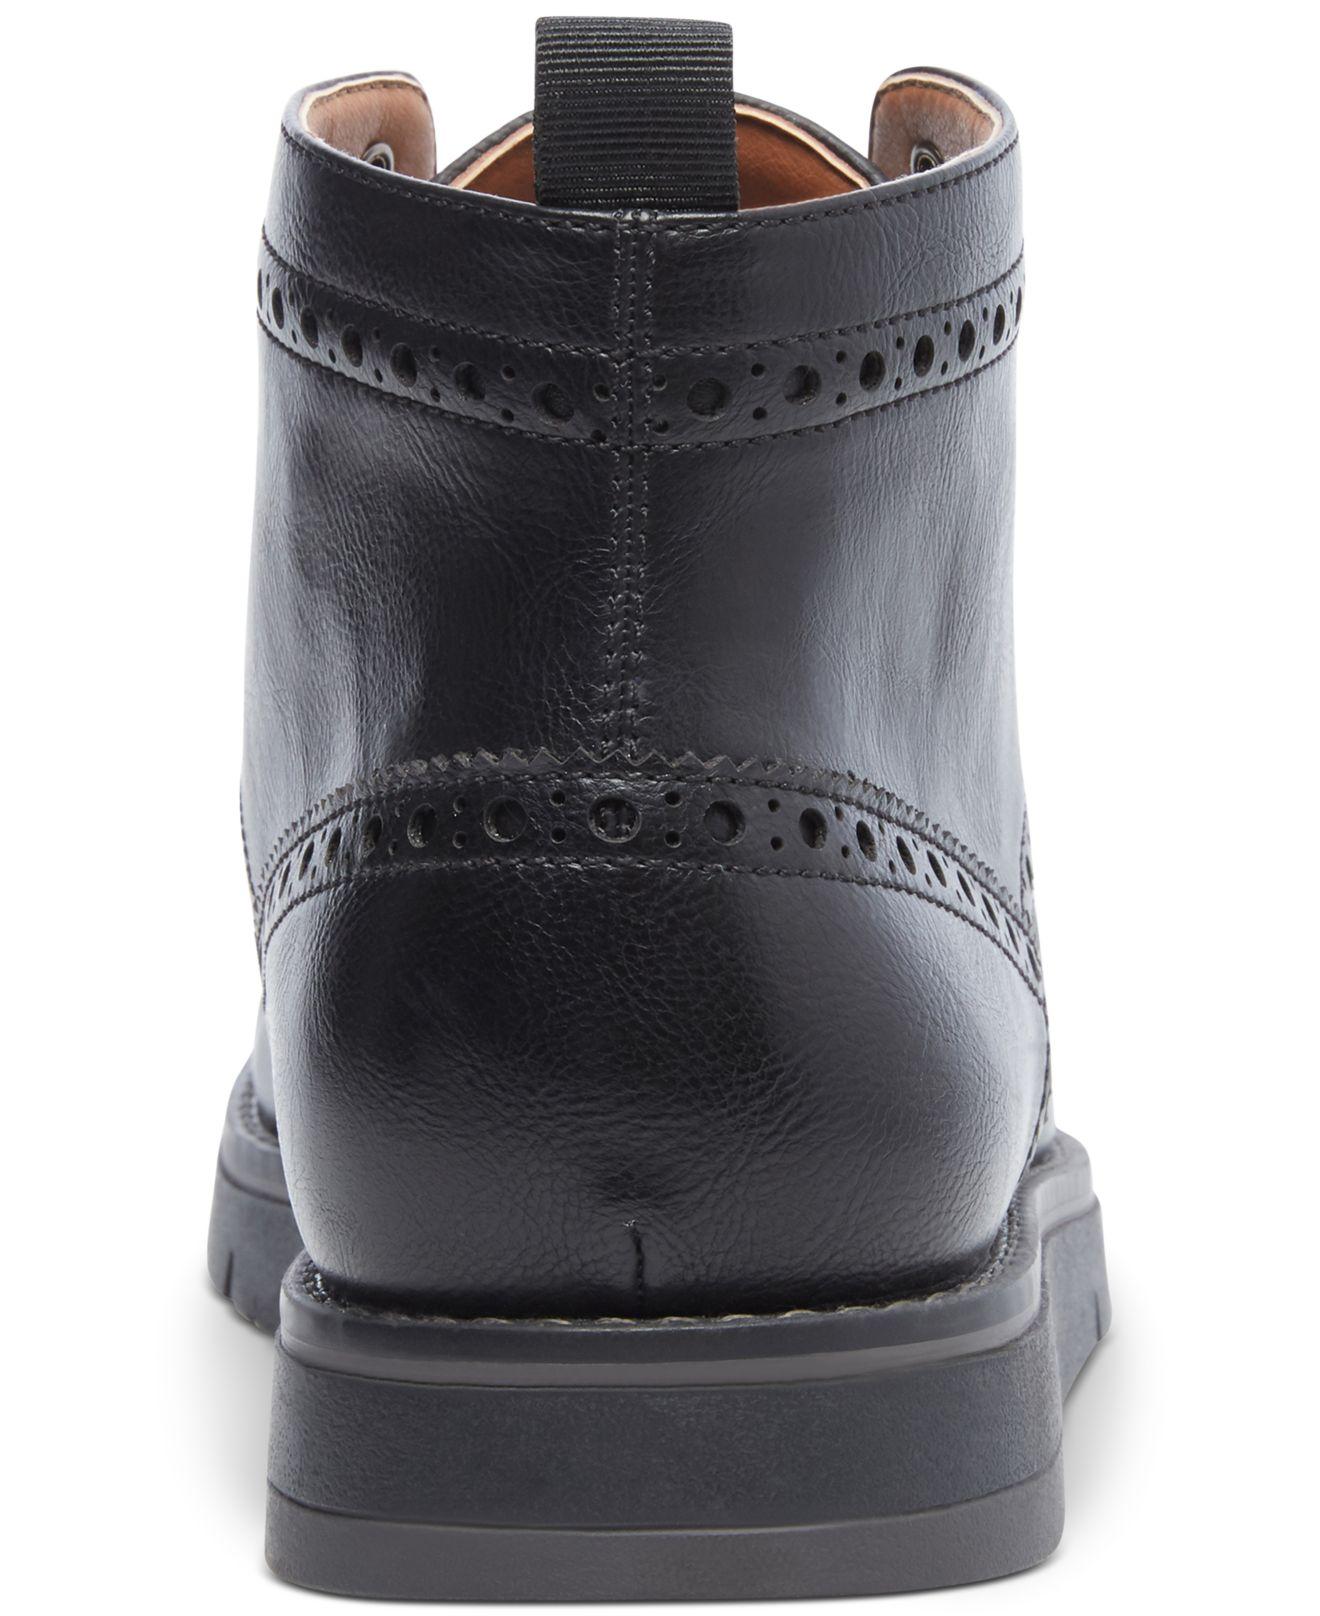 Steve Madden Leather Botine Wingtip Boots in Black for Men - Lyst